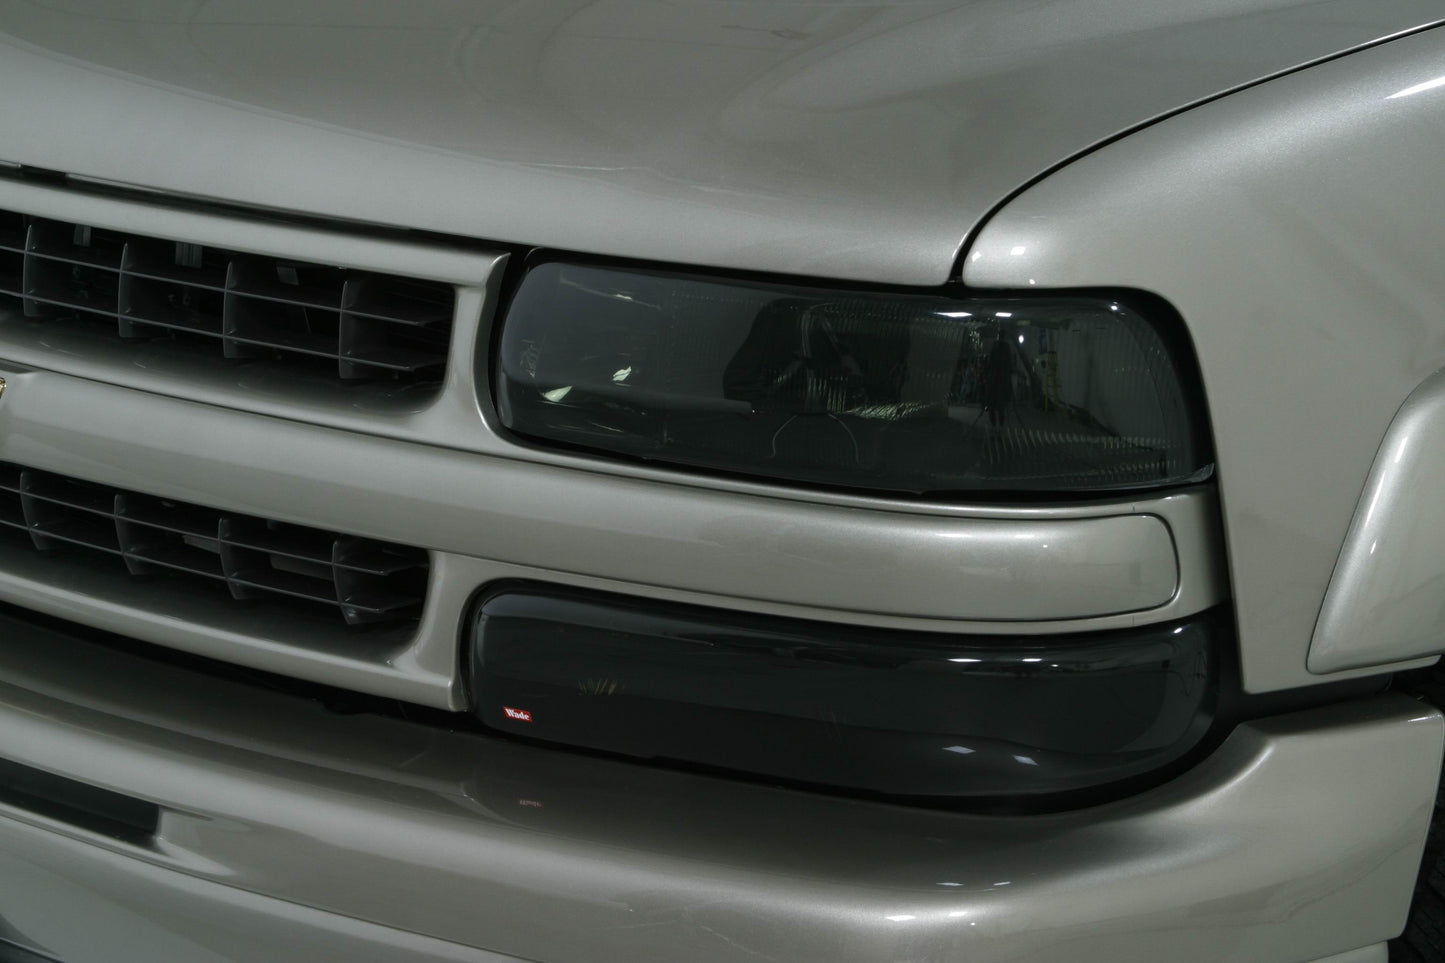 2003 Toyota Tundra Head Light Covers